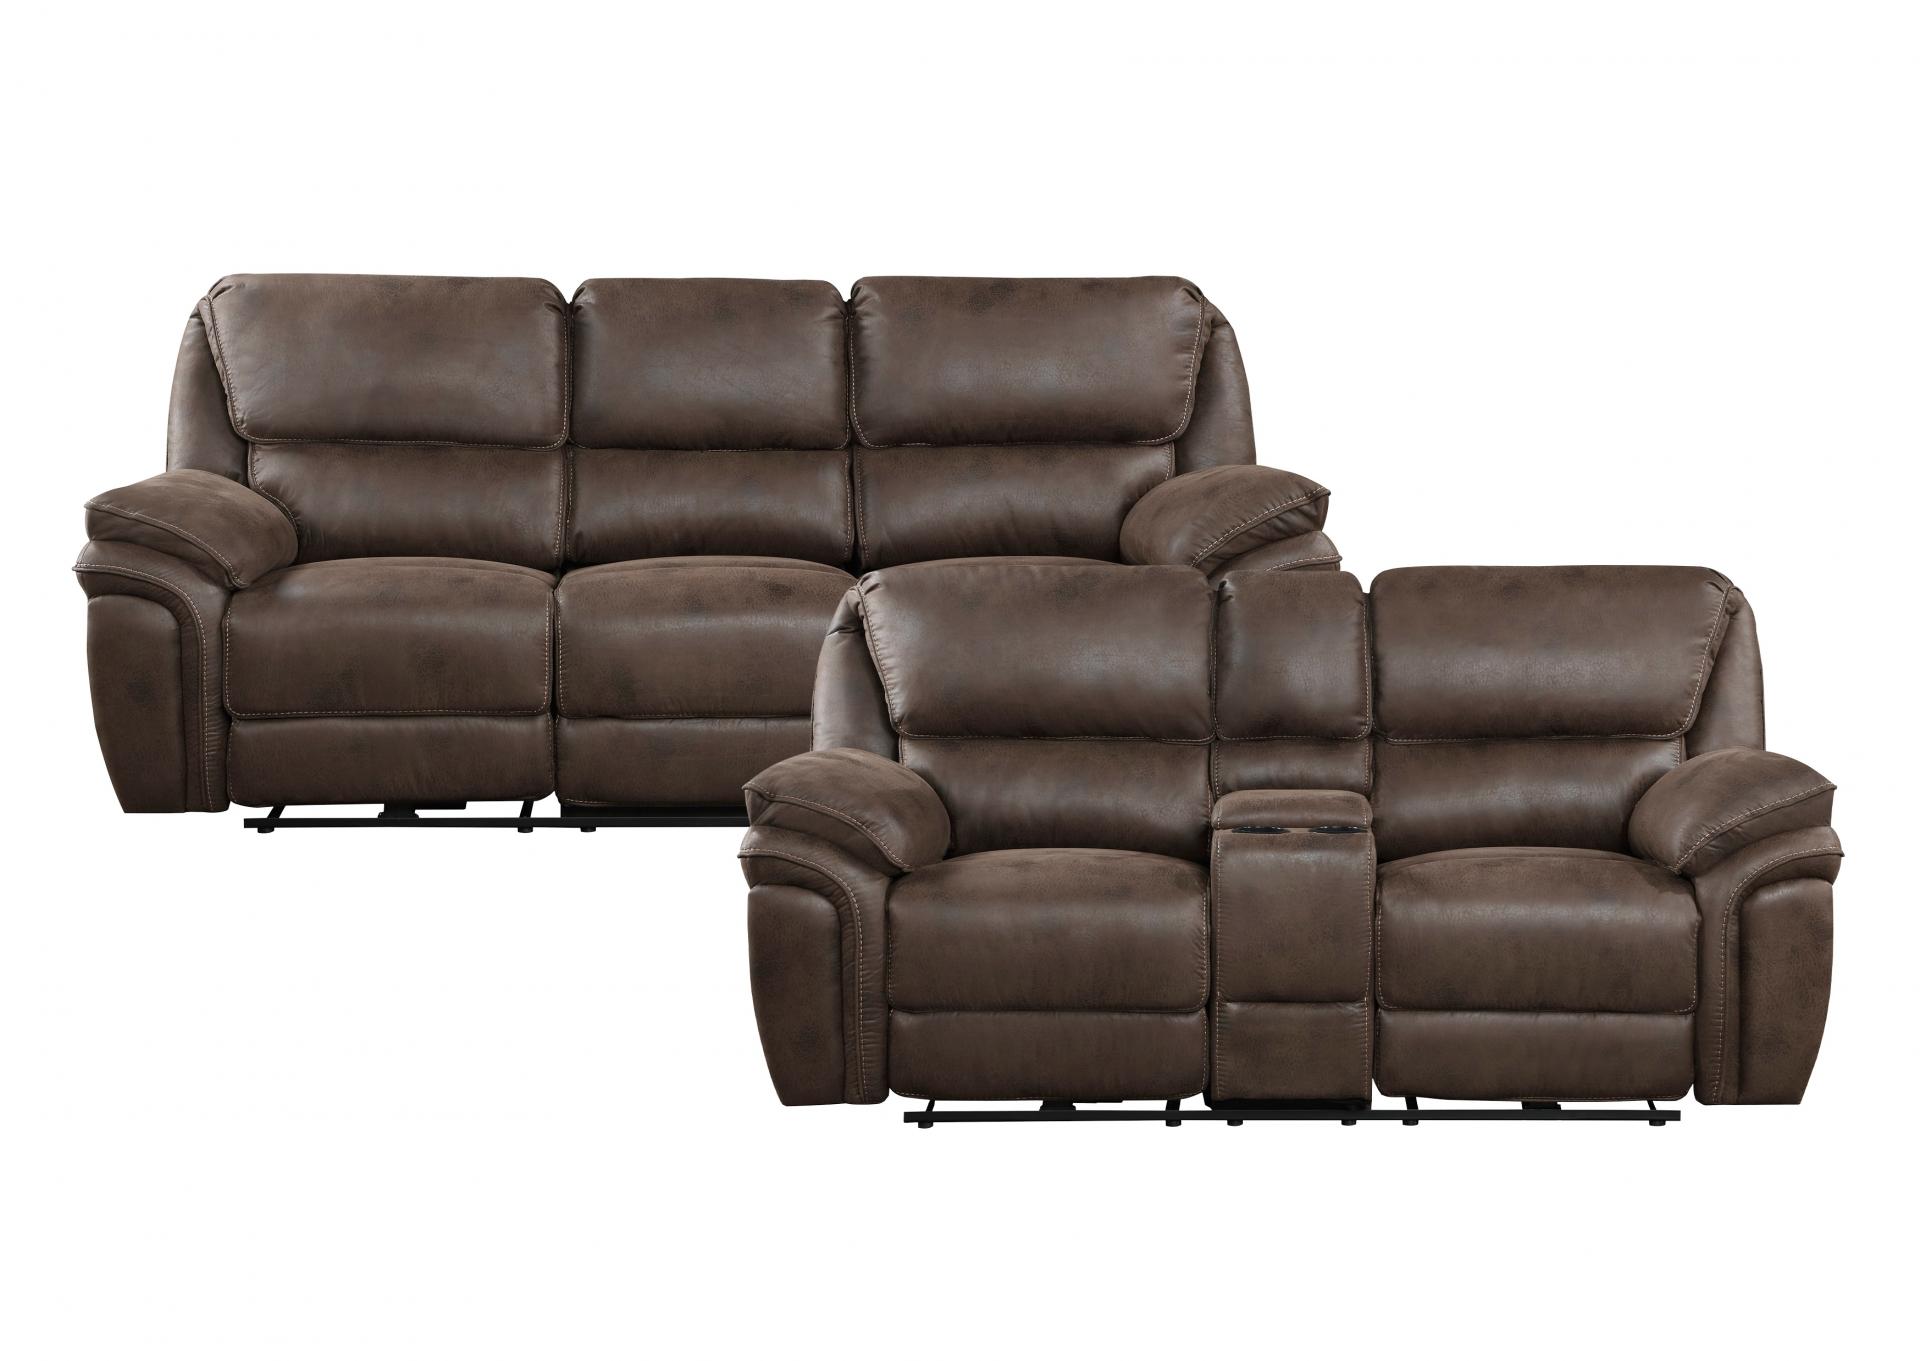 Proctor Double Reclining Sofa in Brown,Comfort Industries